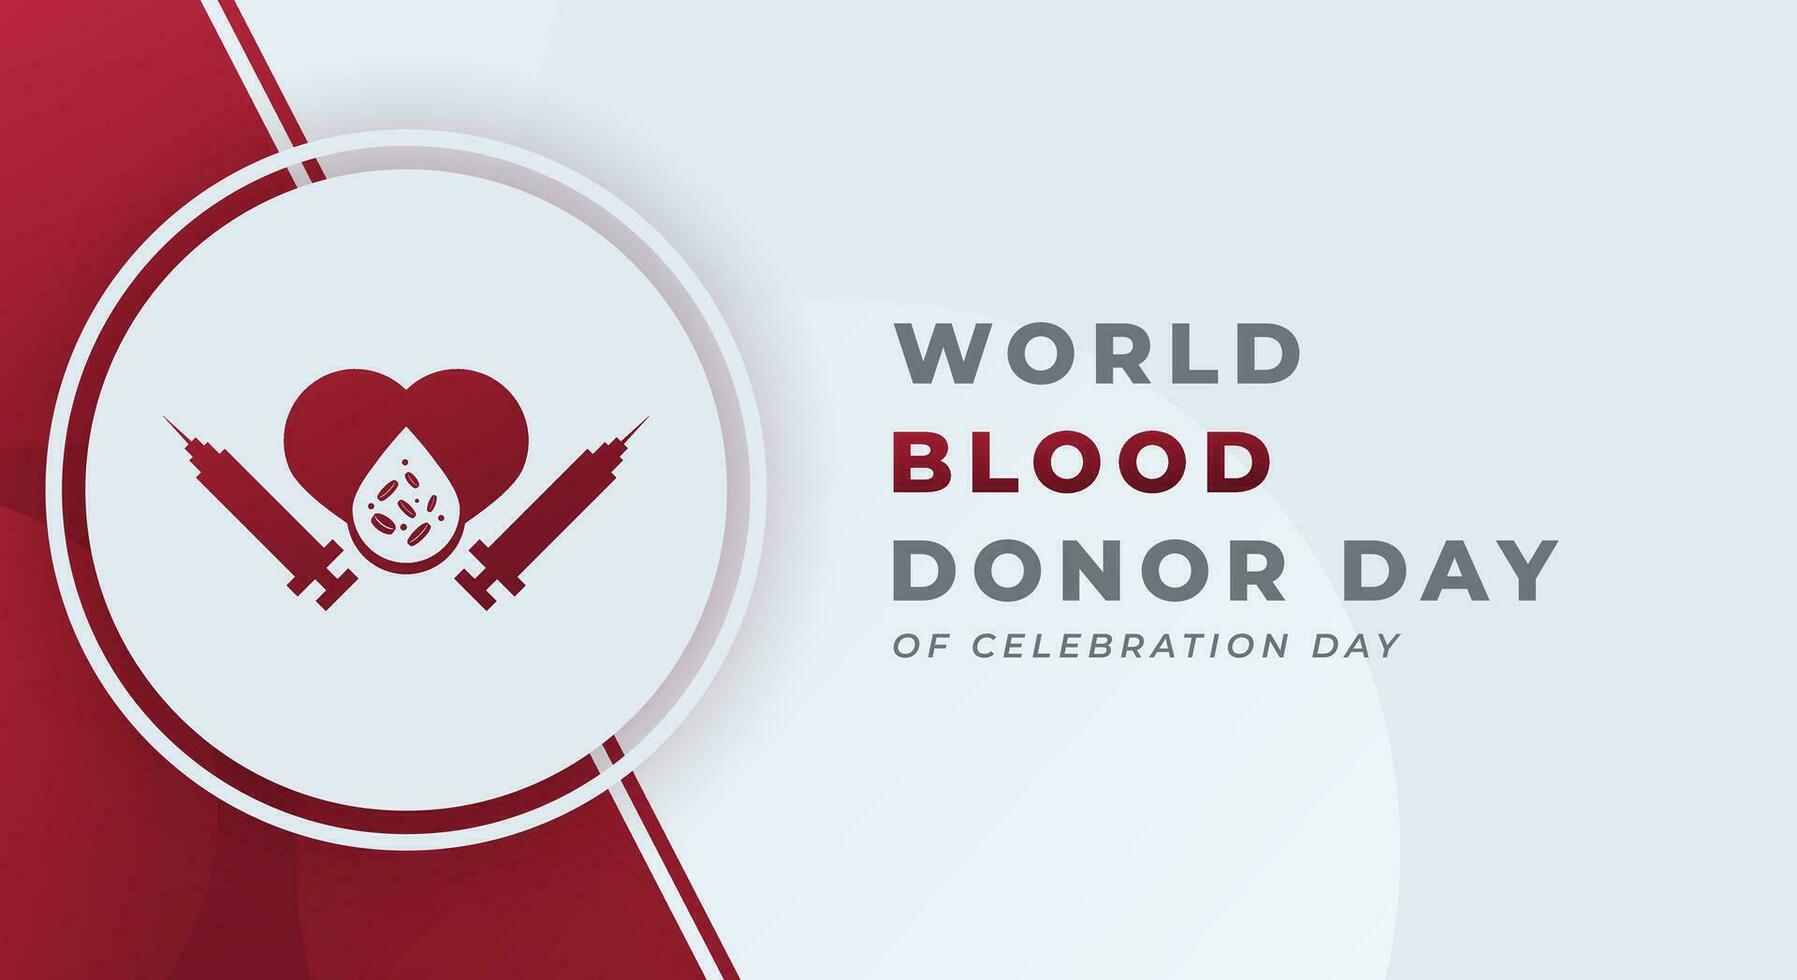 World Blood Donor Day Celebration Vector Design Illustration for Background, Poster, Banner, Advertising